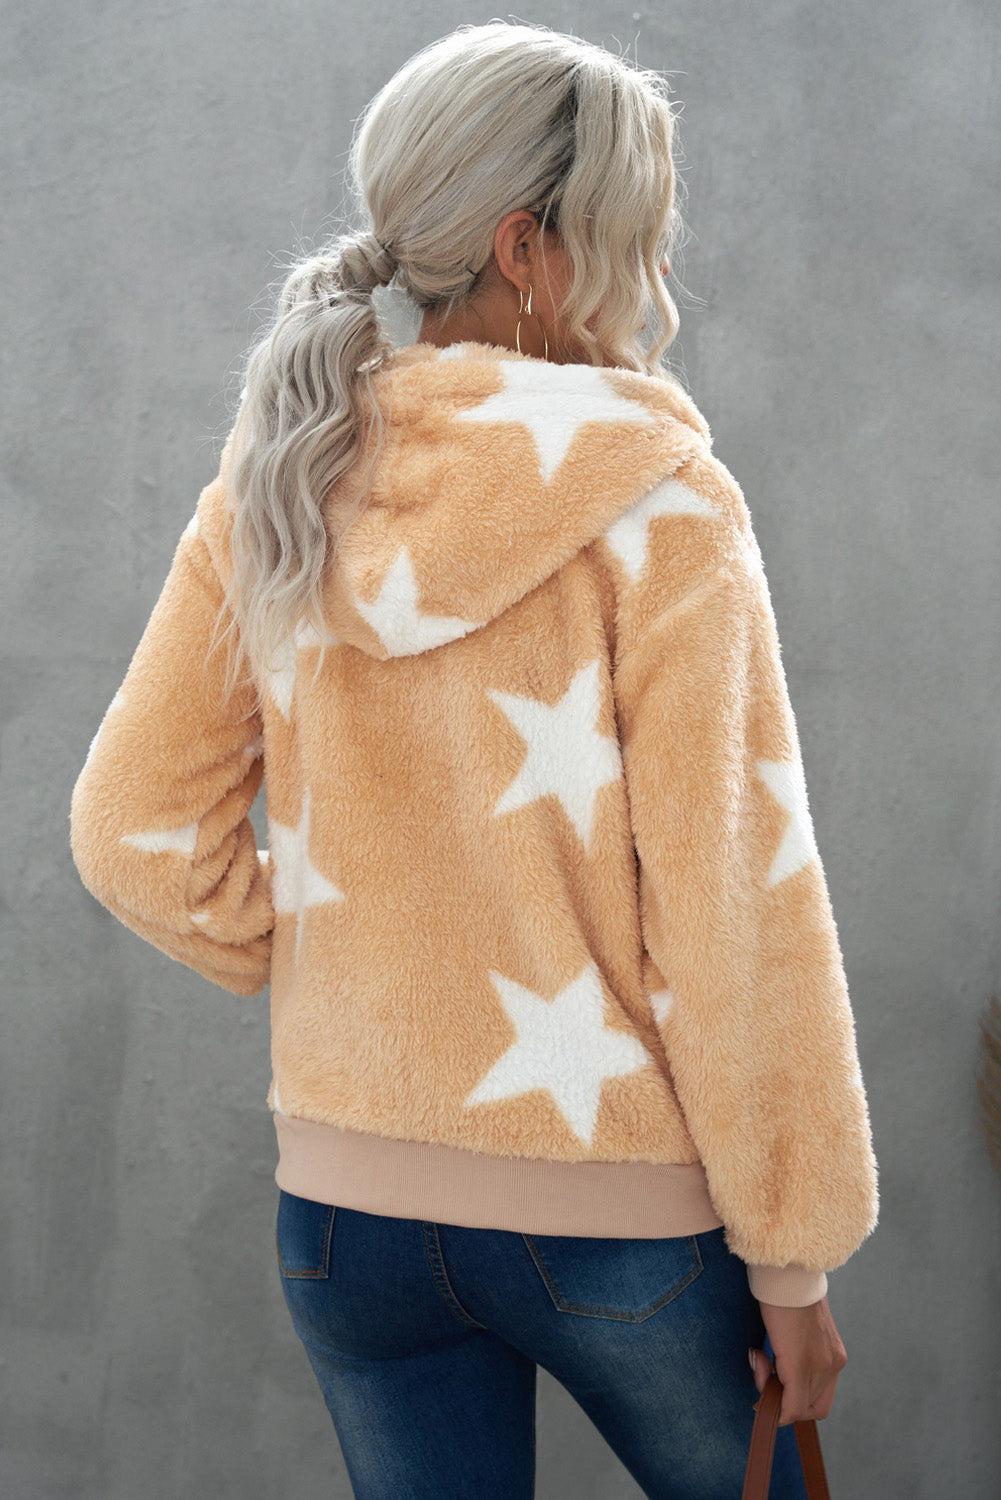 Women's Camo Stars Print Zipper Fleece Hooded Coat with Pockets